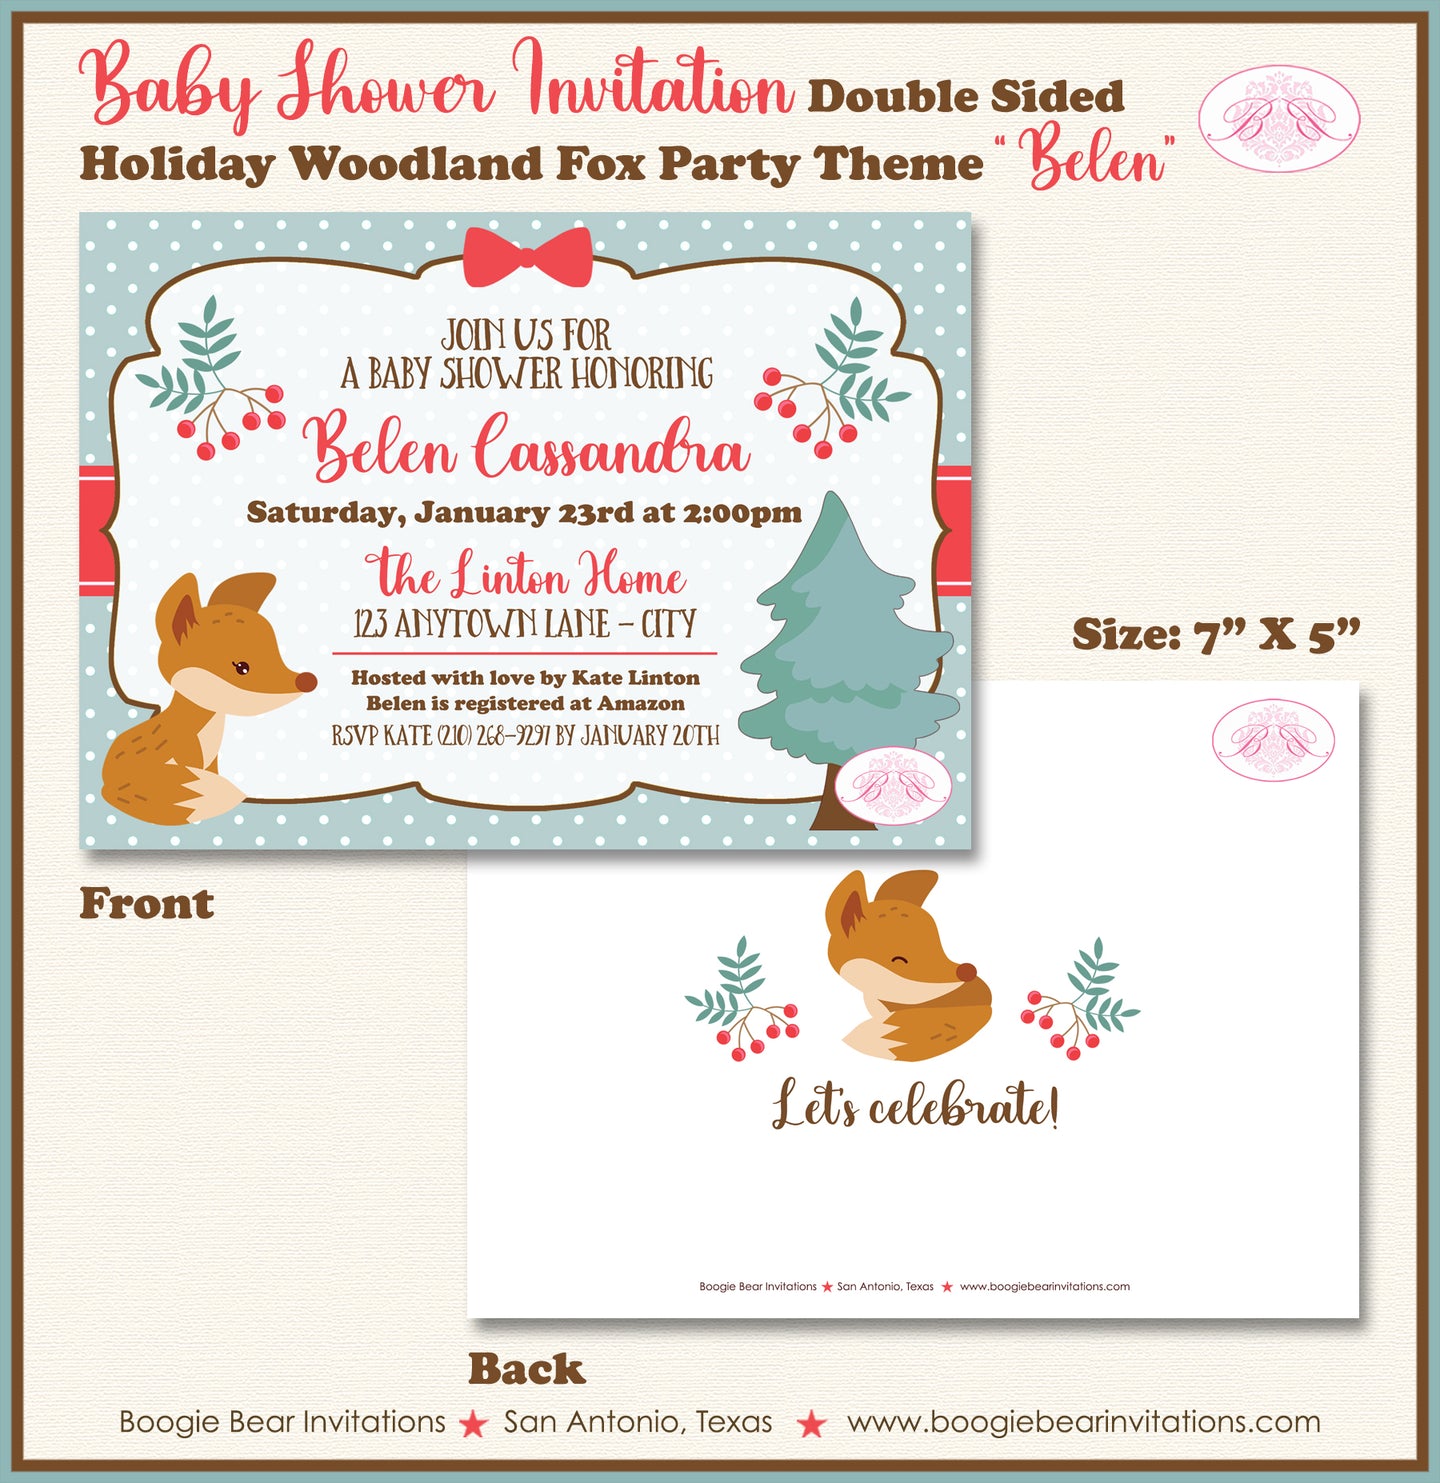 Woodland Holiday Fox Baby Shower Invitation Winter Christmas Boogie Bear Invitations Belen Theme Paperless Printable Printed